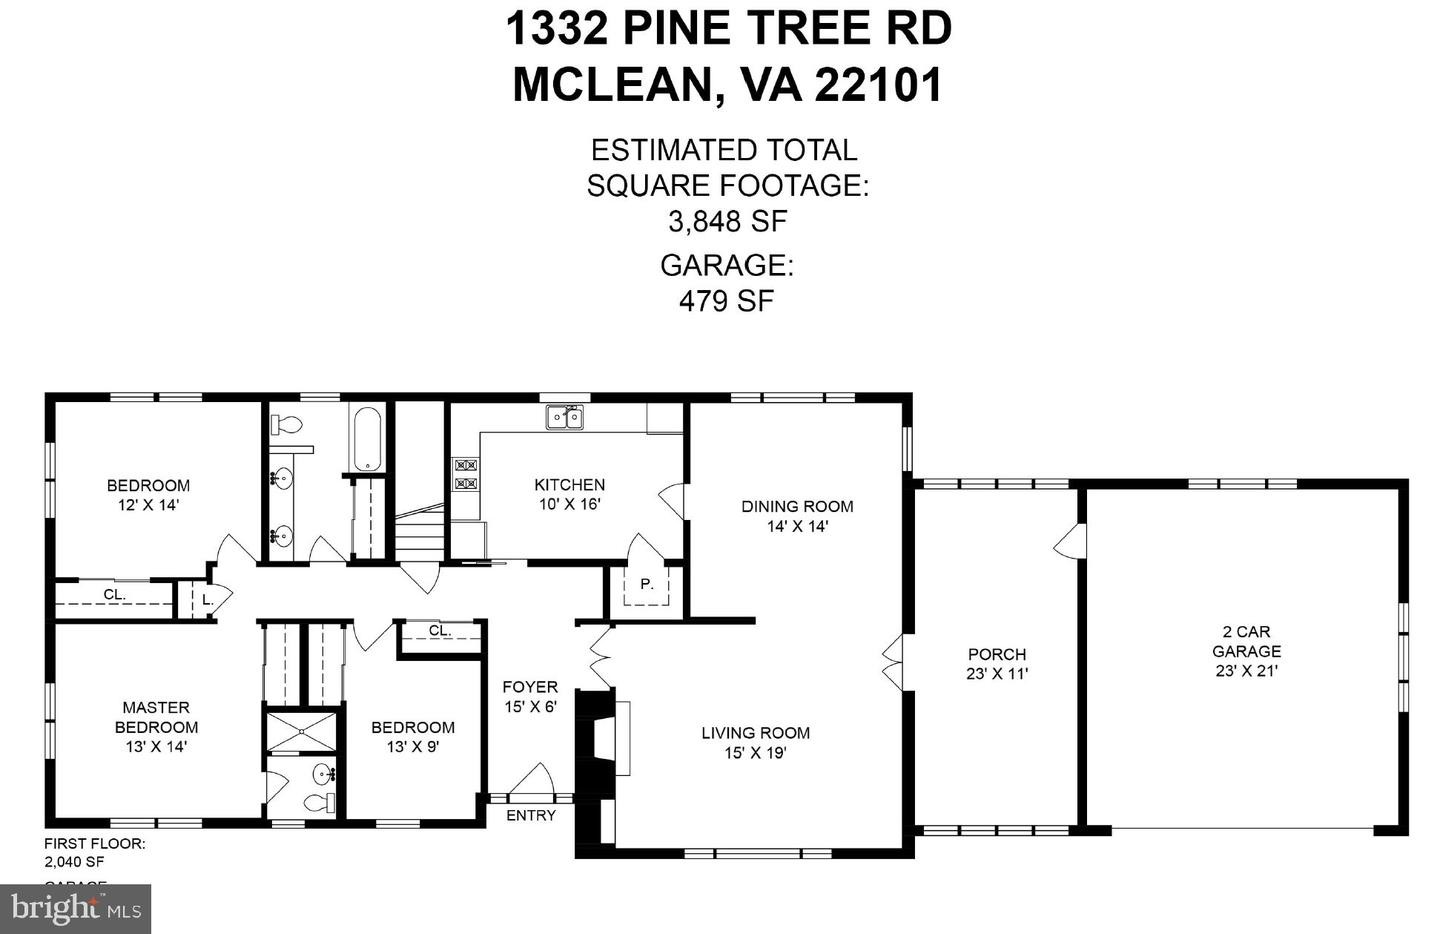 20. 1332 Pine Tree Rd